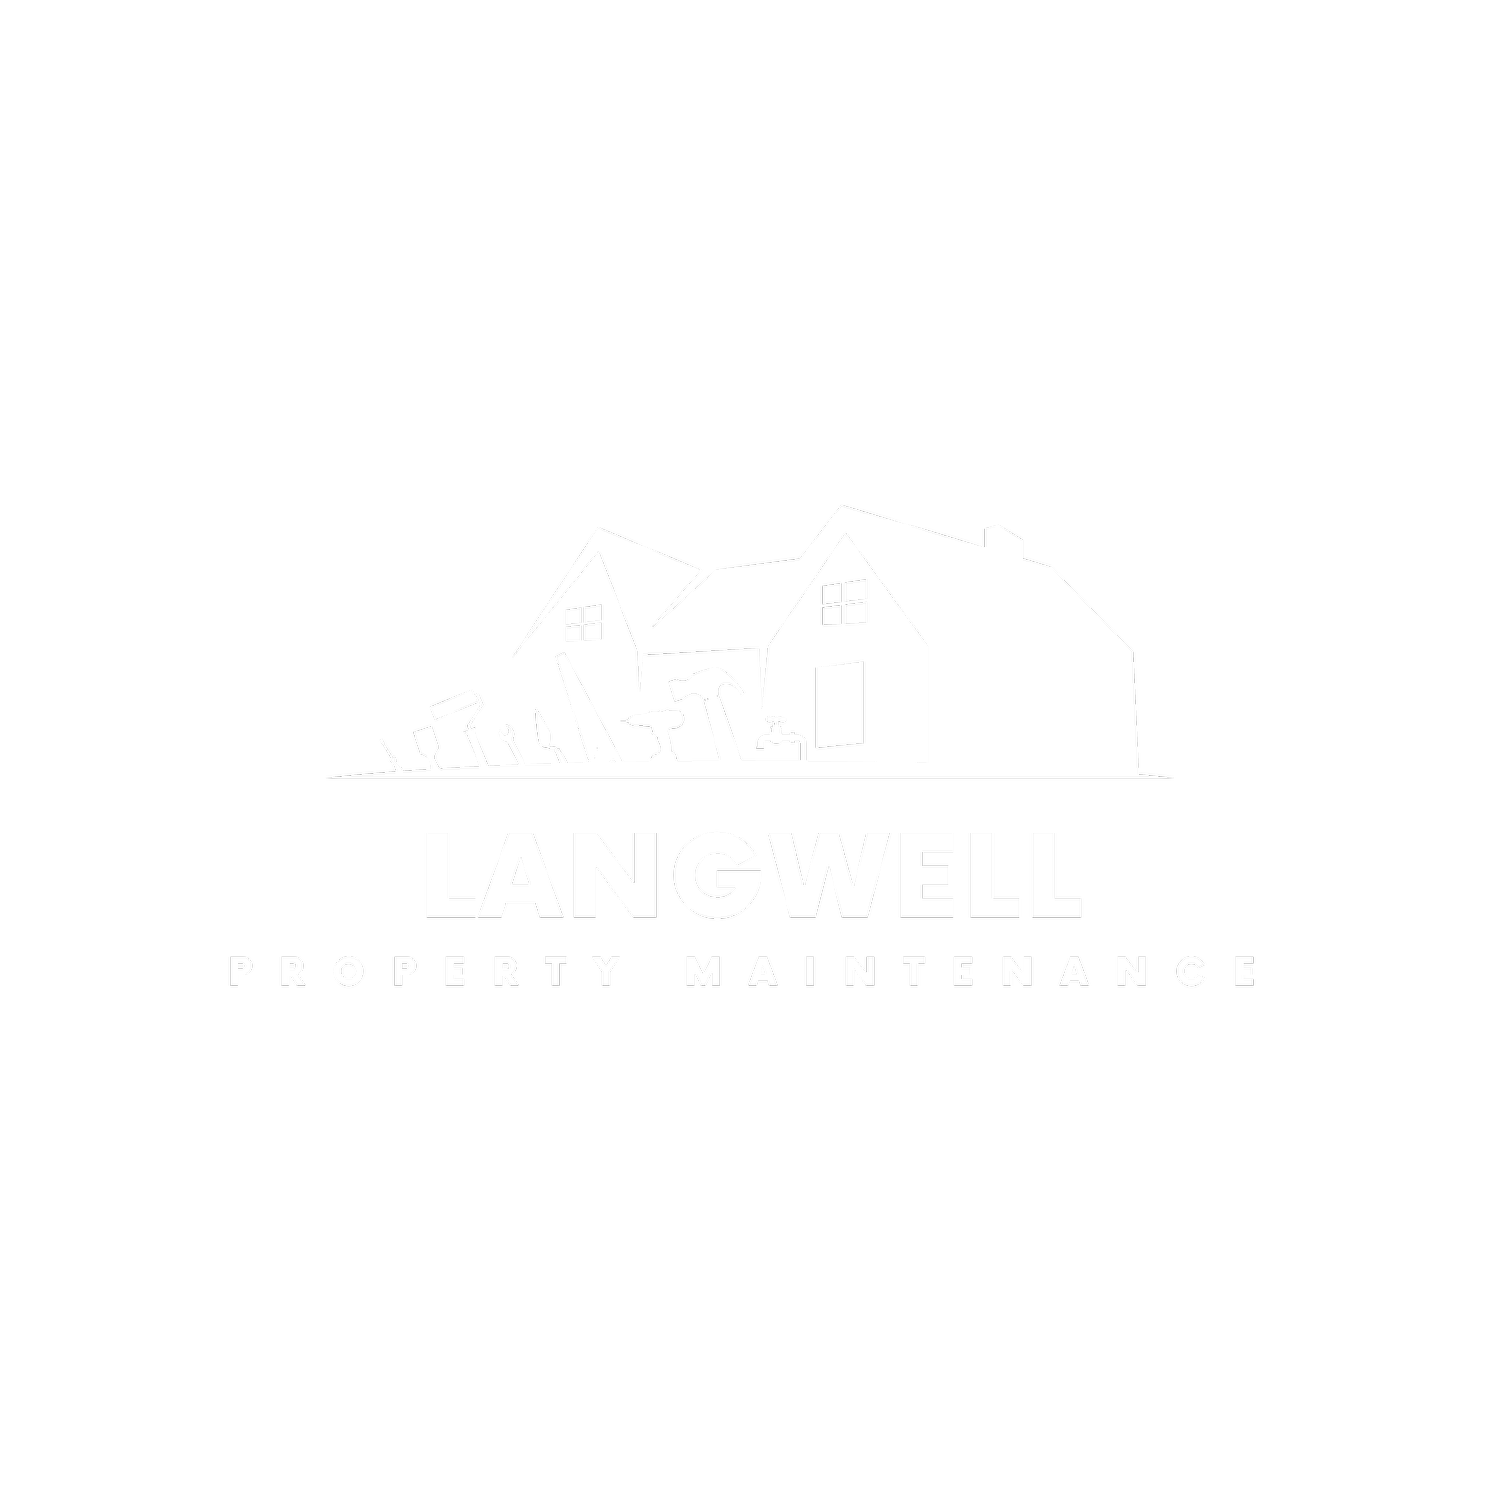 Langwell property maintenance 